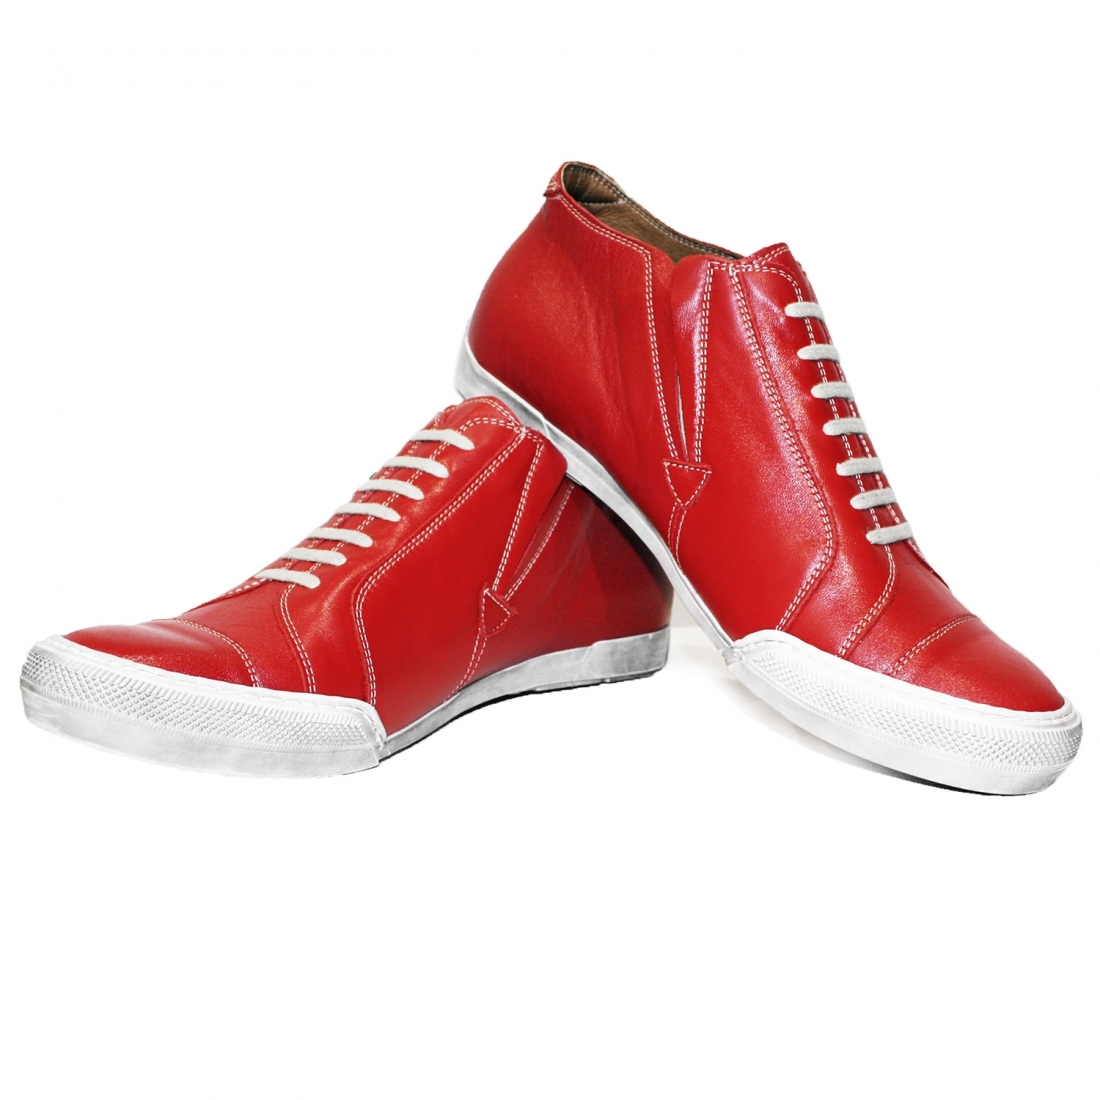 Modello Rednoise - Повседневная обувь - Handmade Colorful Italian Leather Shoes